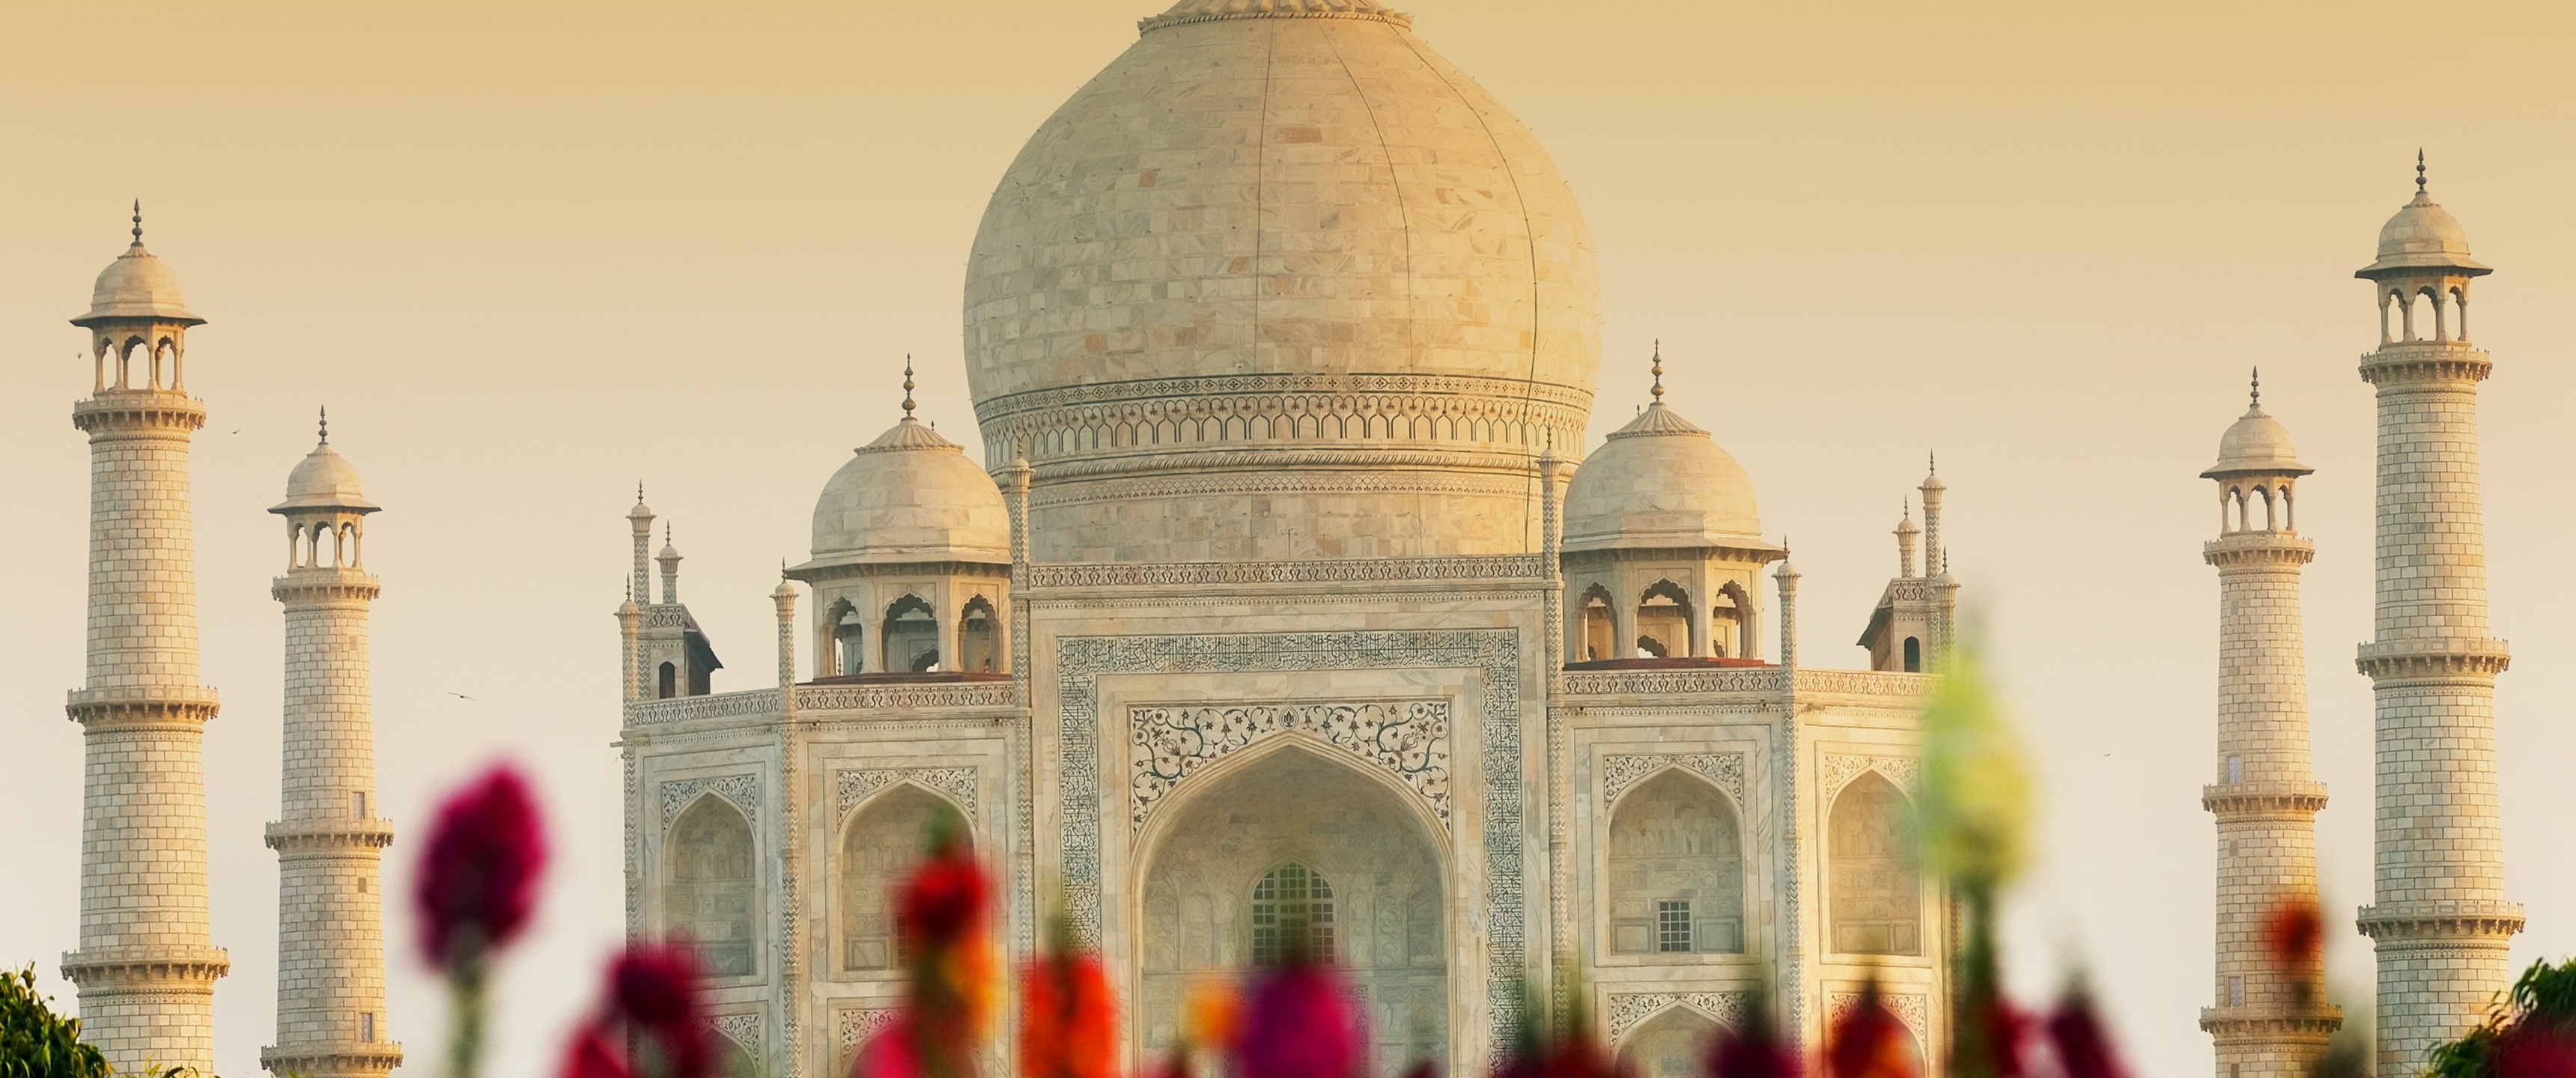 Taj Mahal wallpaper 4k, Agra, India, UNESCO World Heritage site, 3440x1440 Dual Screen Desktop